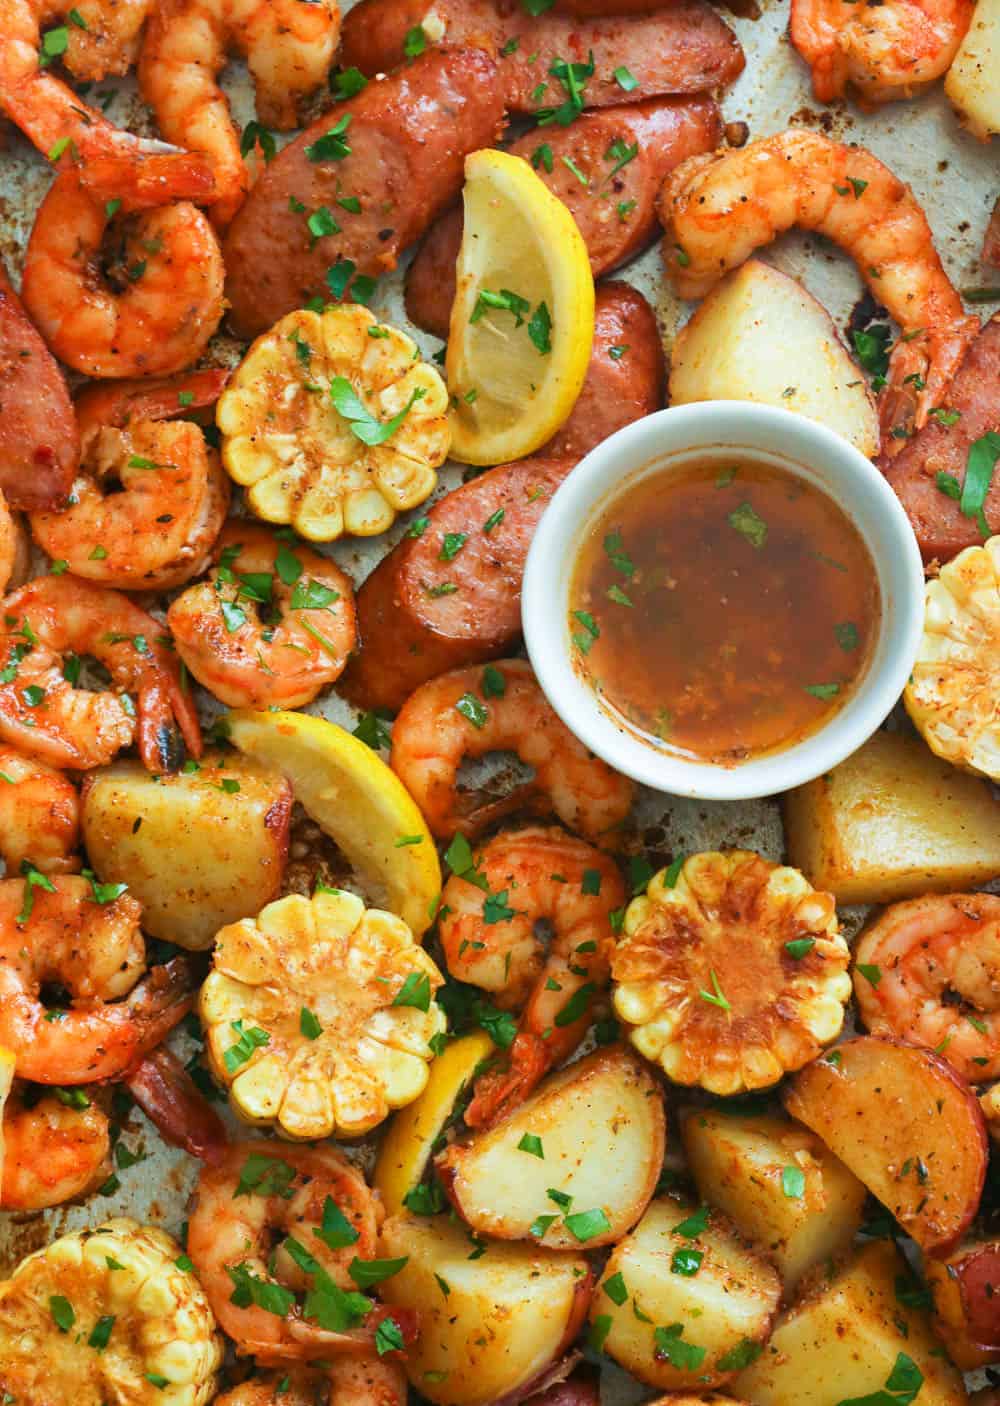 Cajun Shrimp Boil - A tasty and straightforward classic shrimp